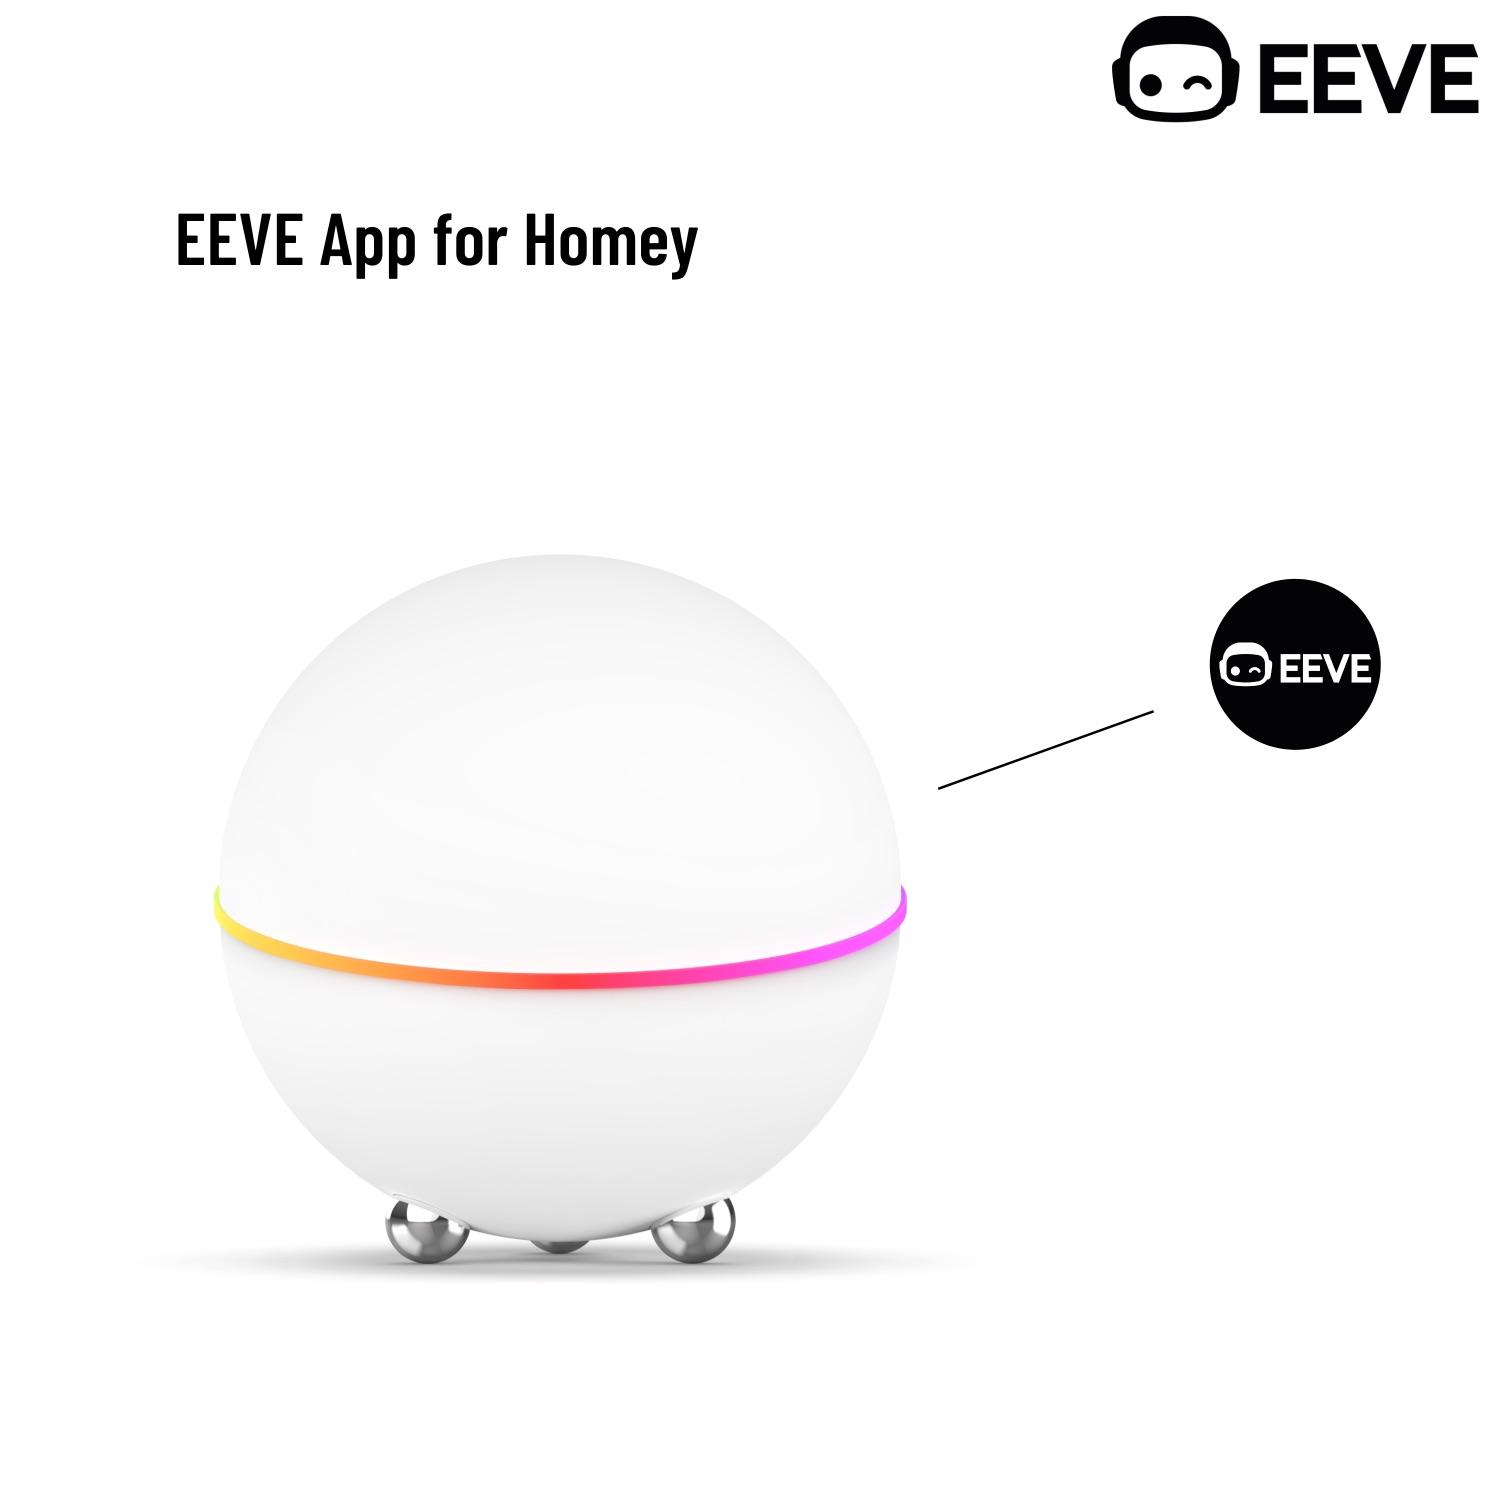 EEVE App for Homey